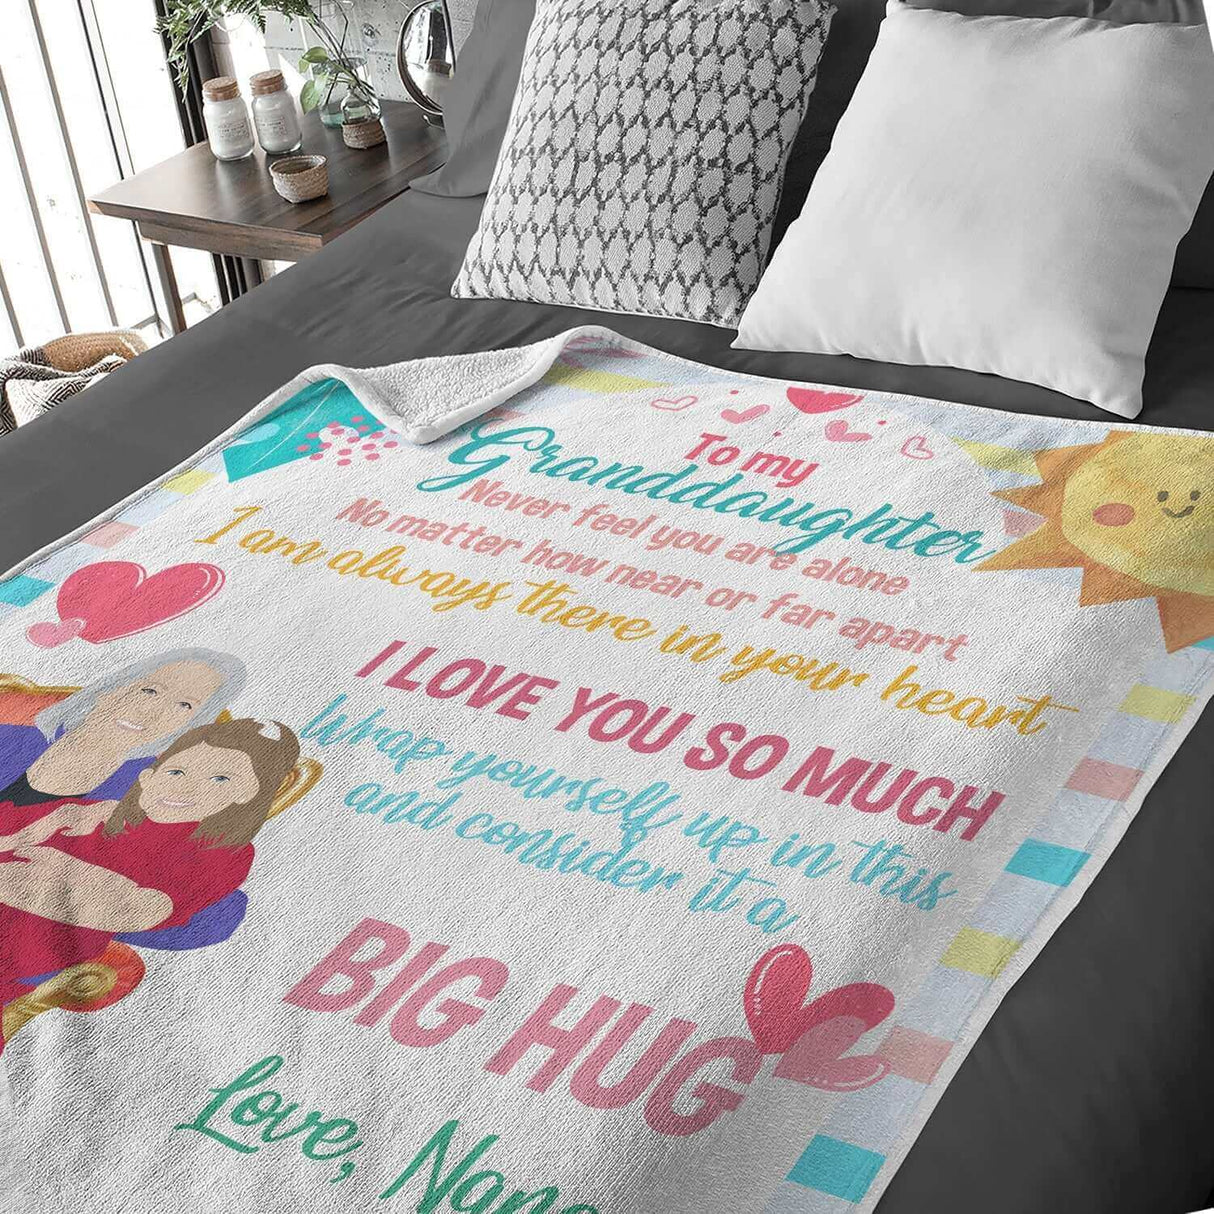 Personalized Granddaughter Blanket From Nana